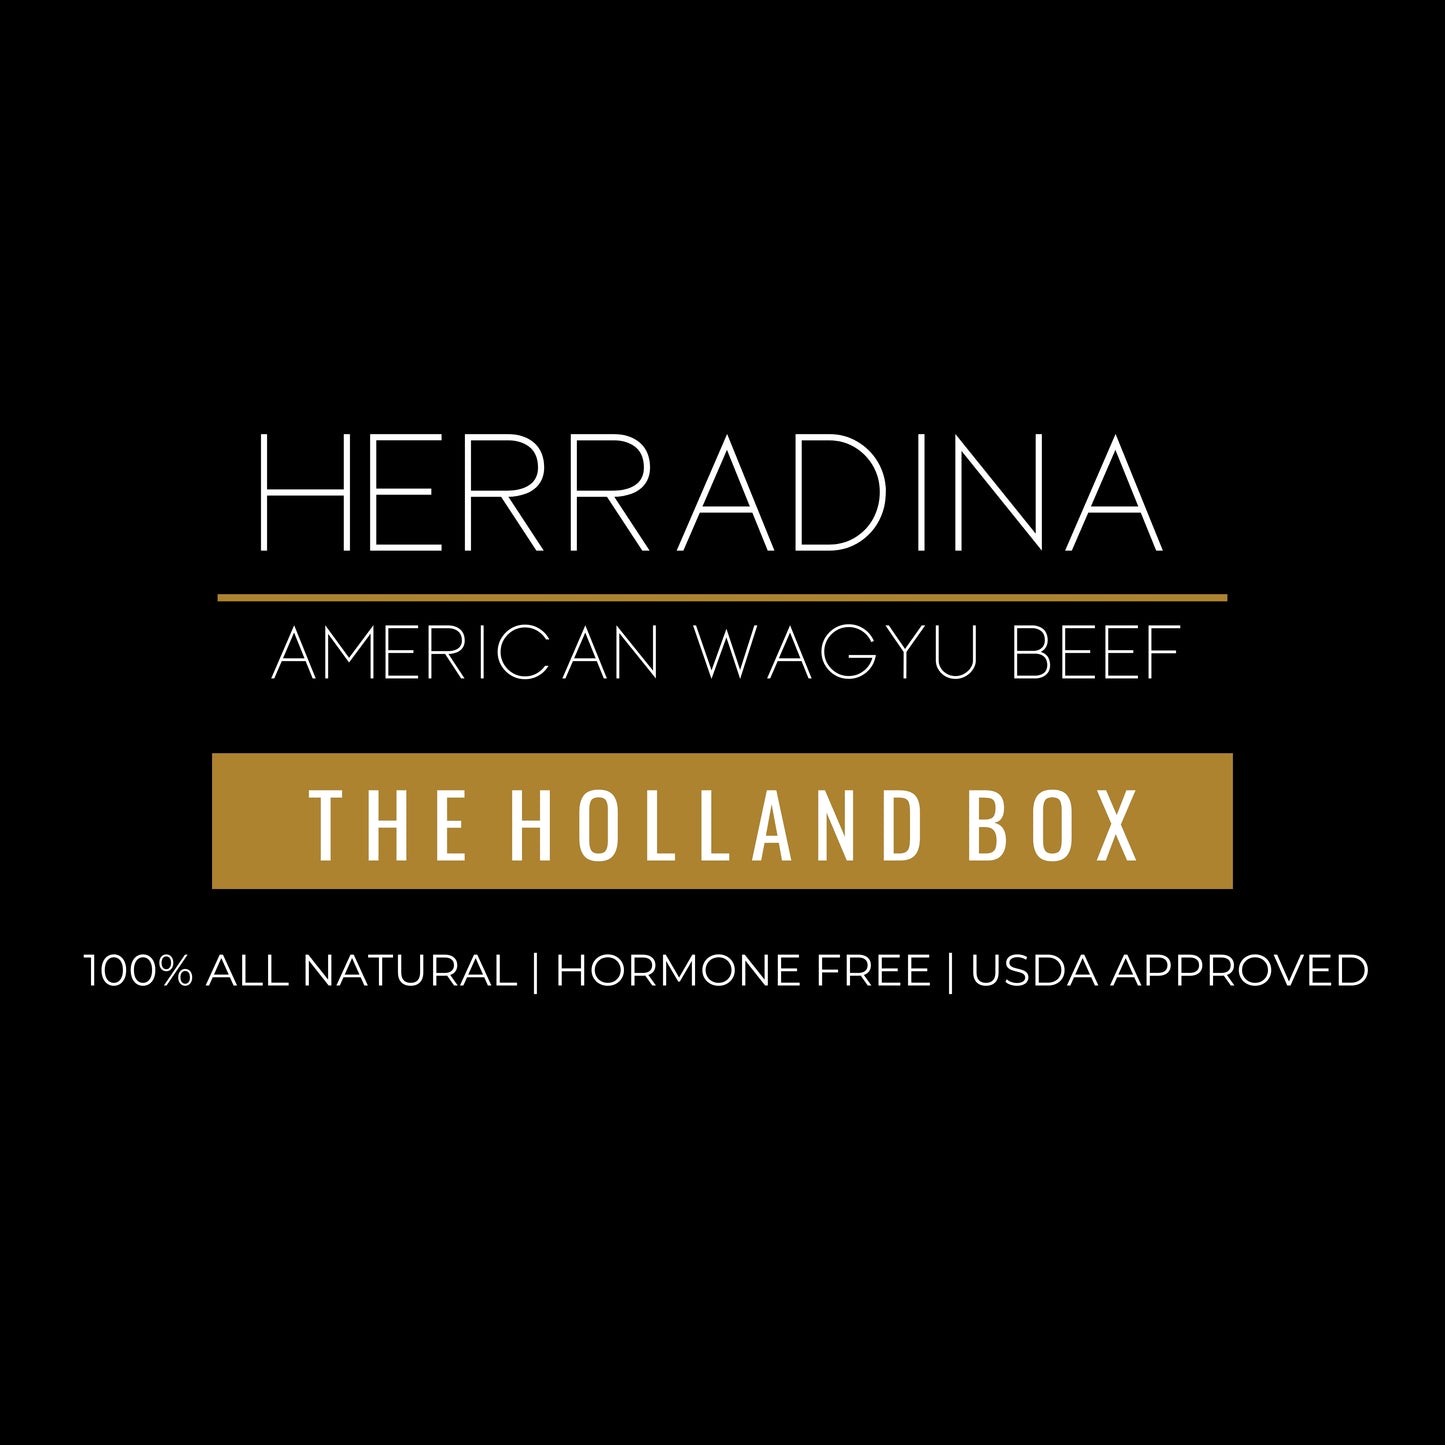 THE HOLLAND BOX